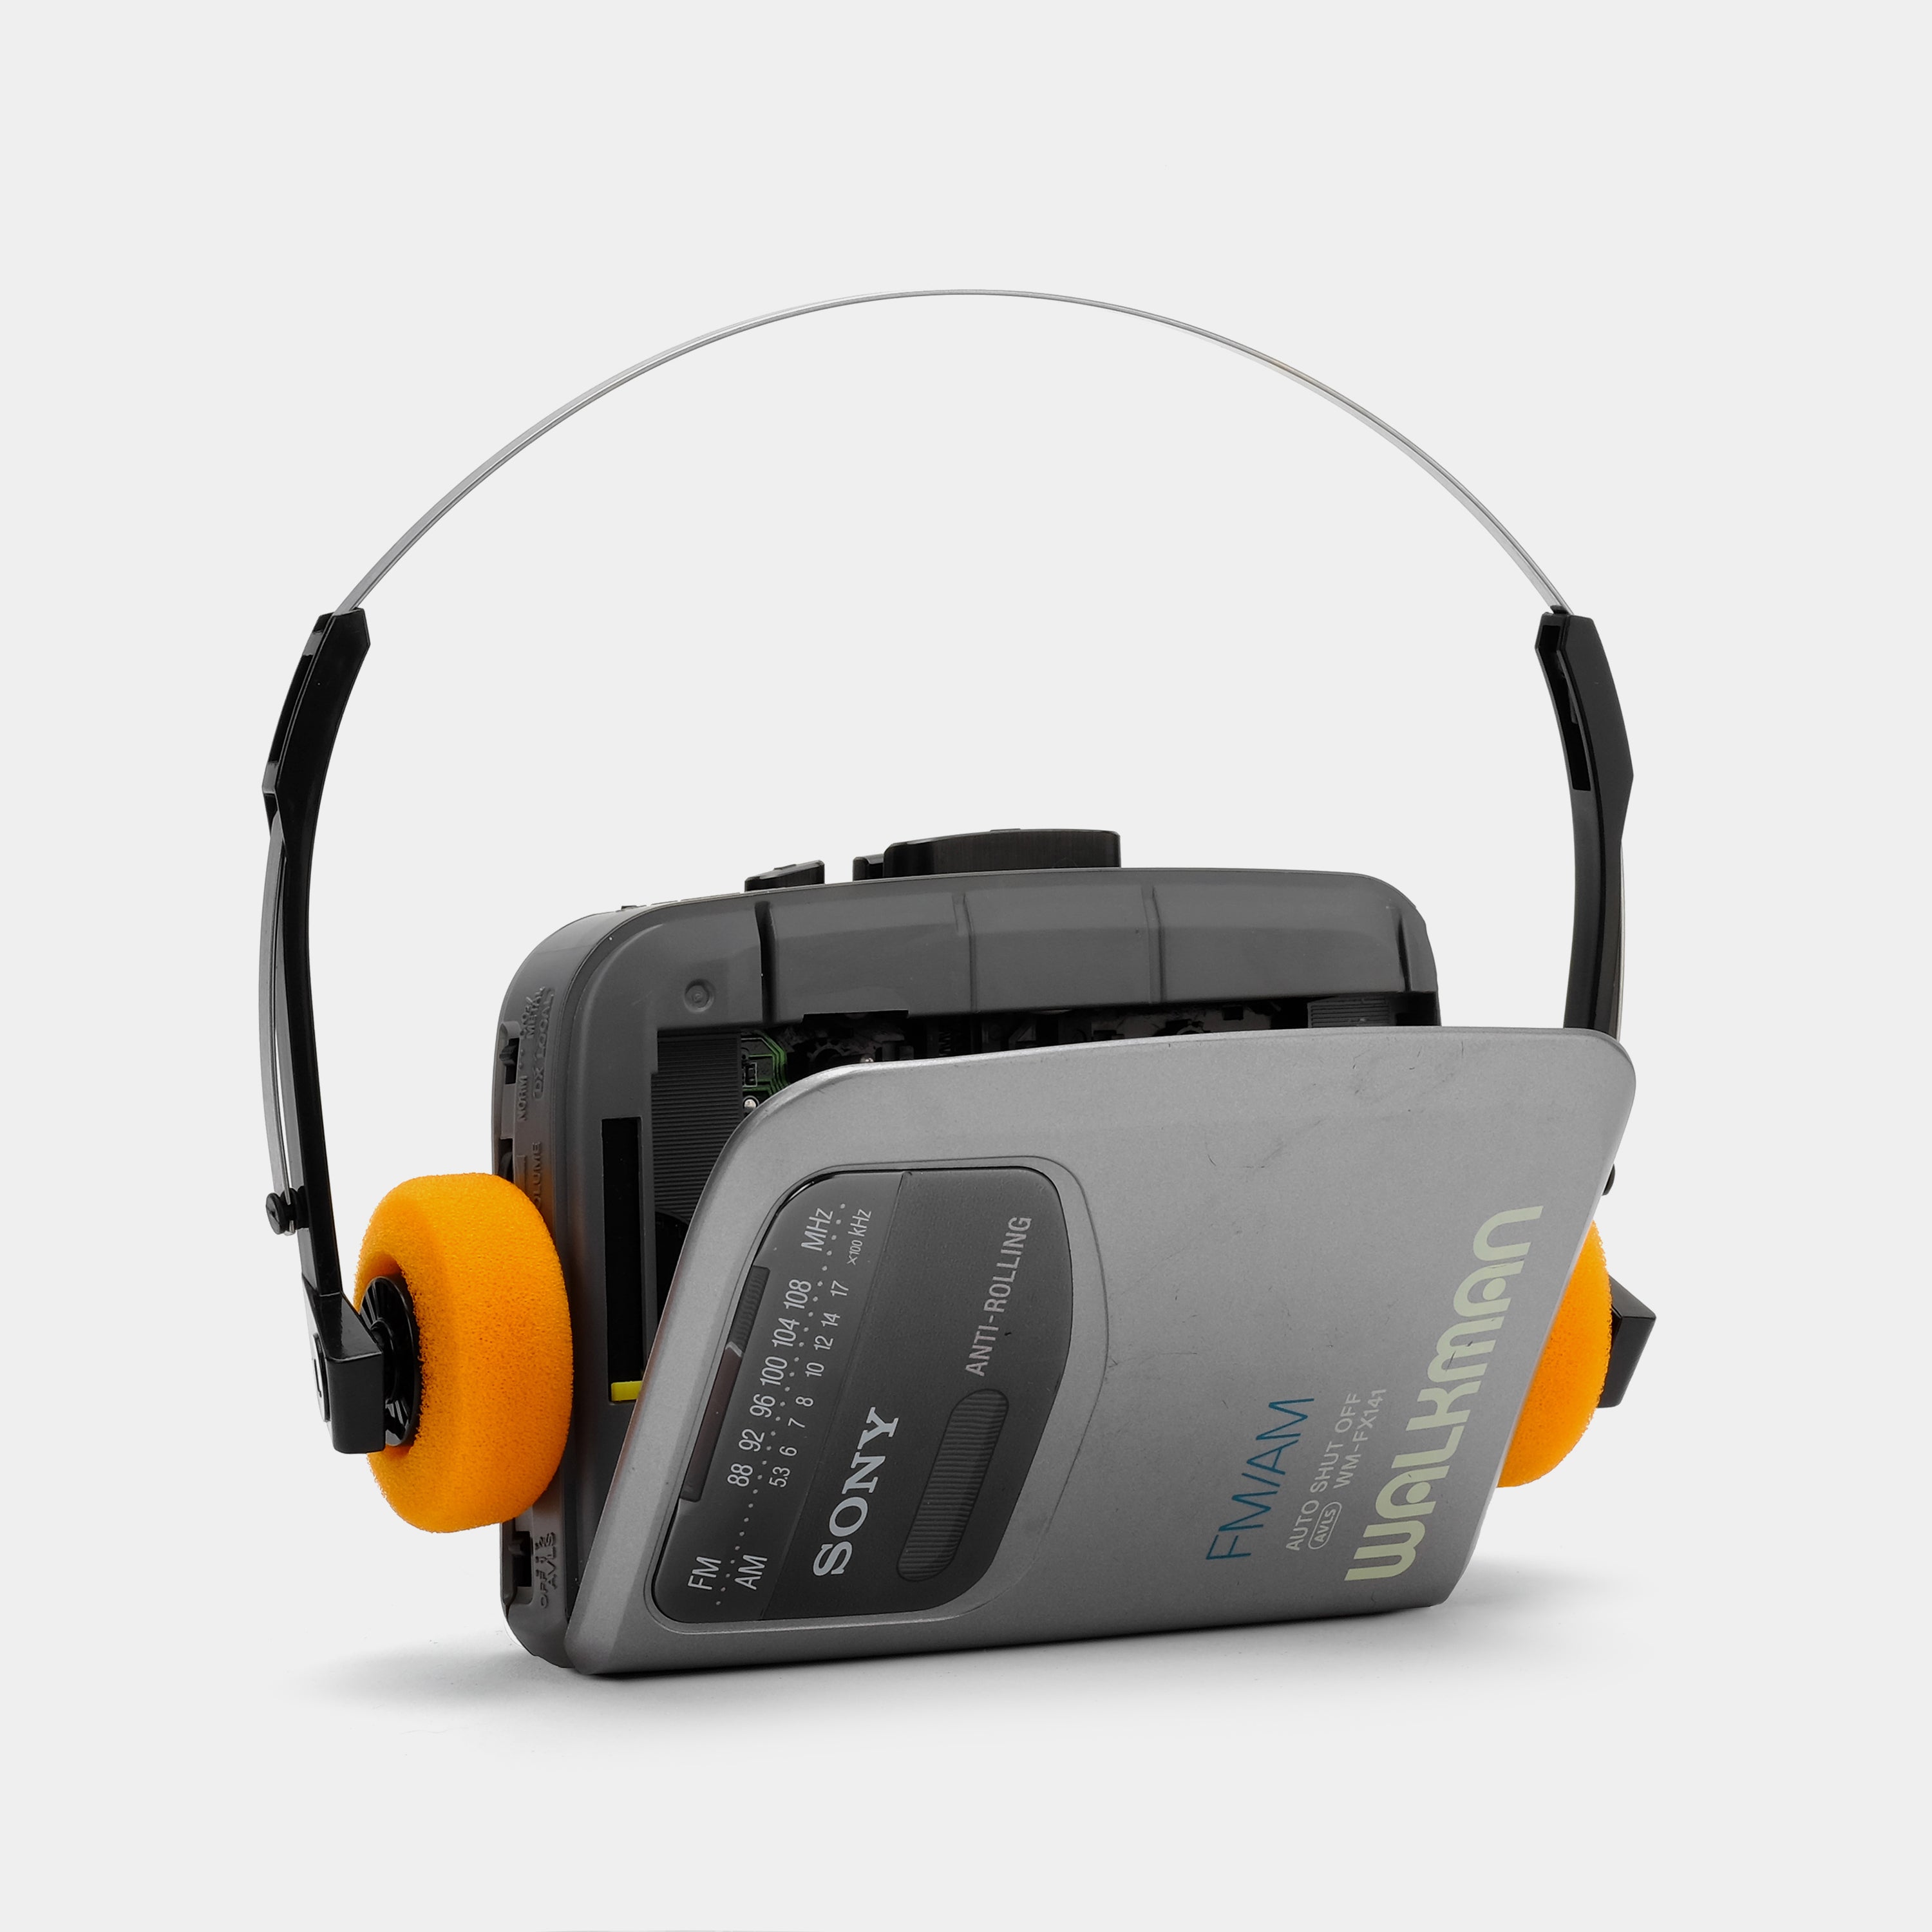 Sony Walkman WM-FX141 AM/FM Portable Cassette Player